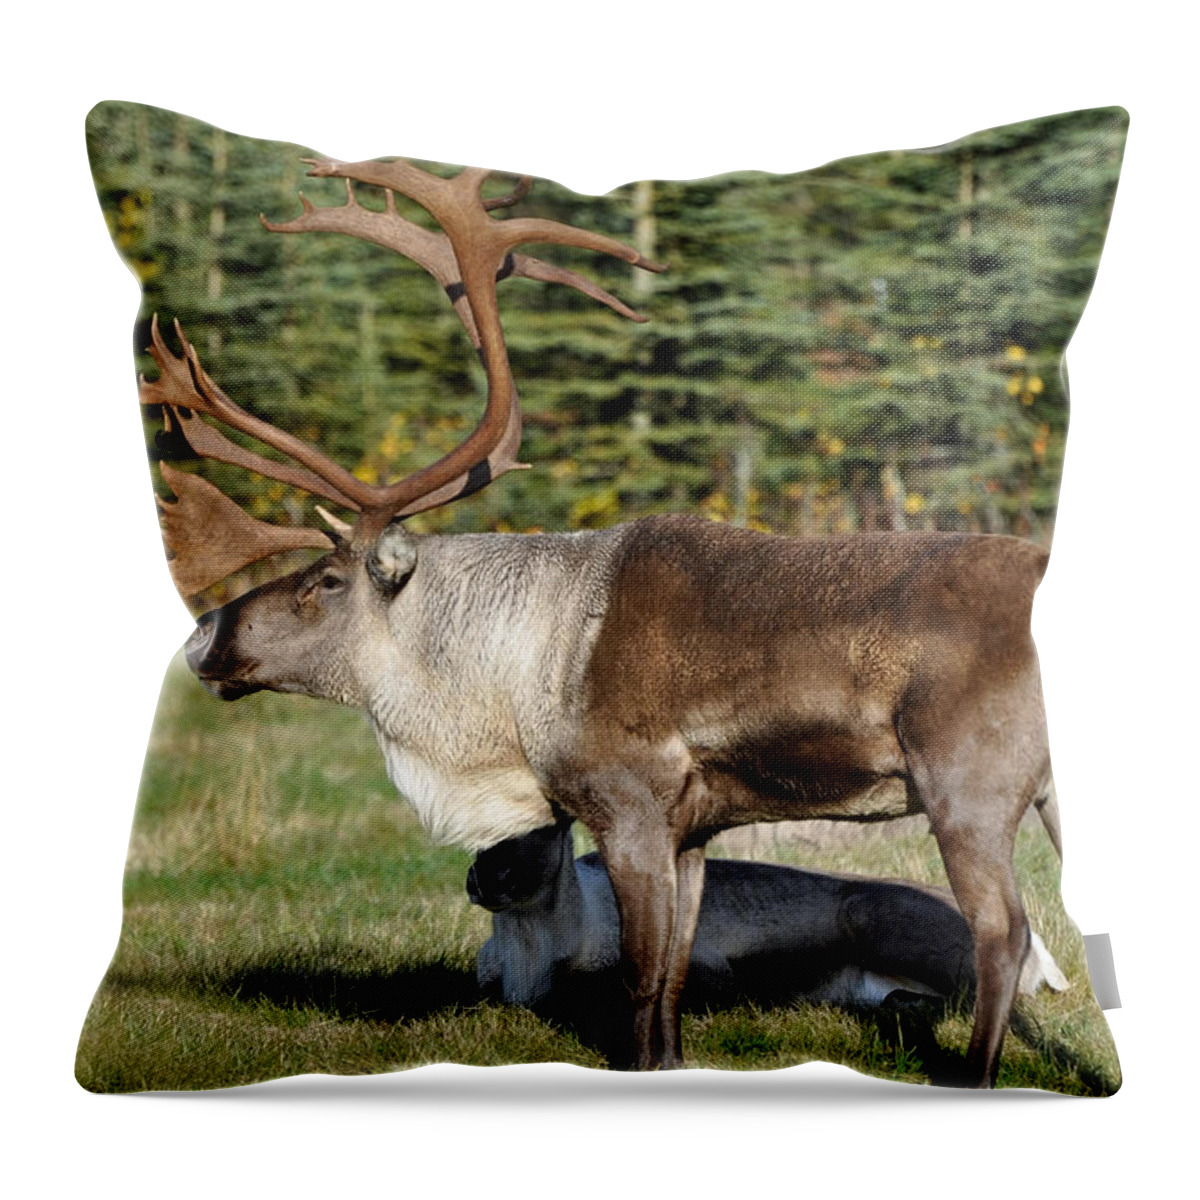 Alaska Throw Pillow featuring the photograph Caribou by Clint Pickarsky